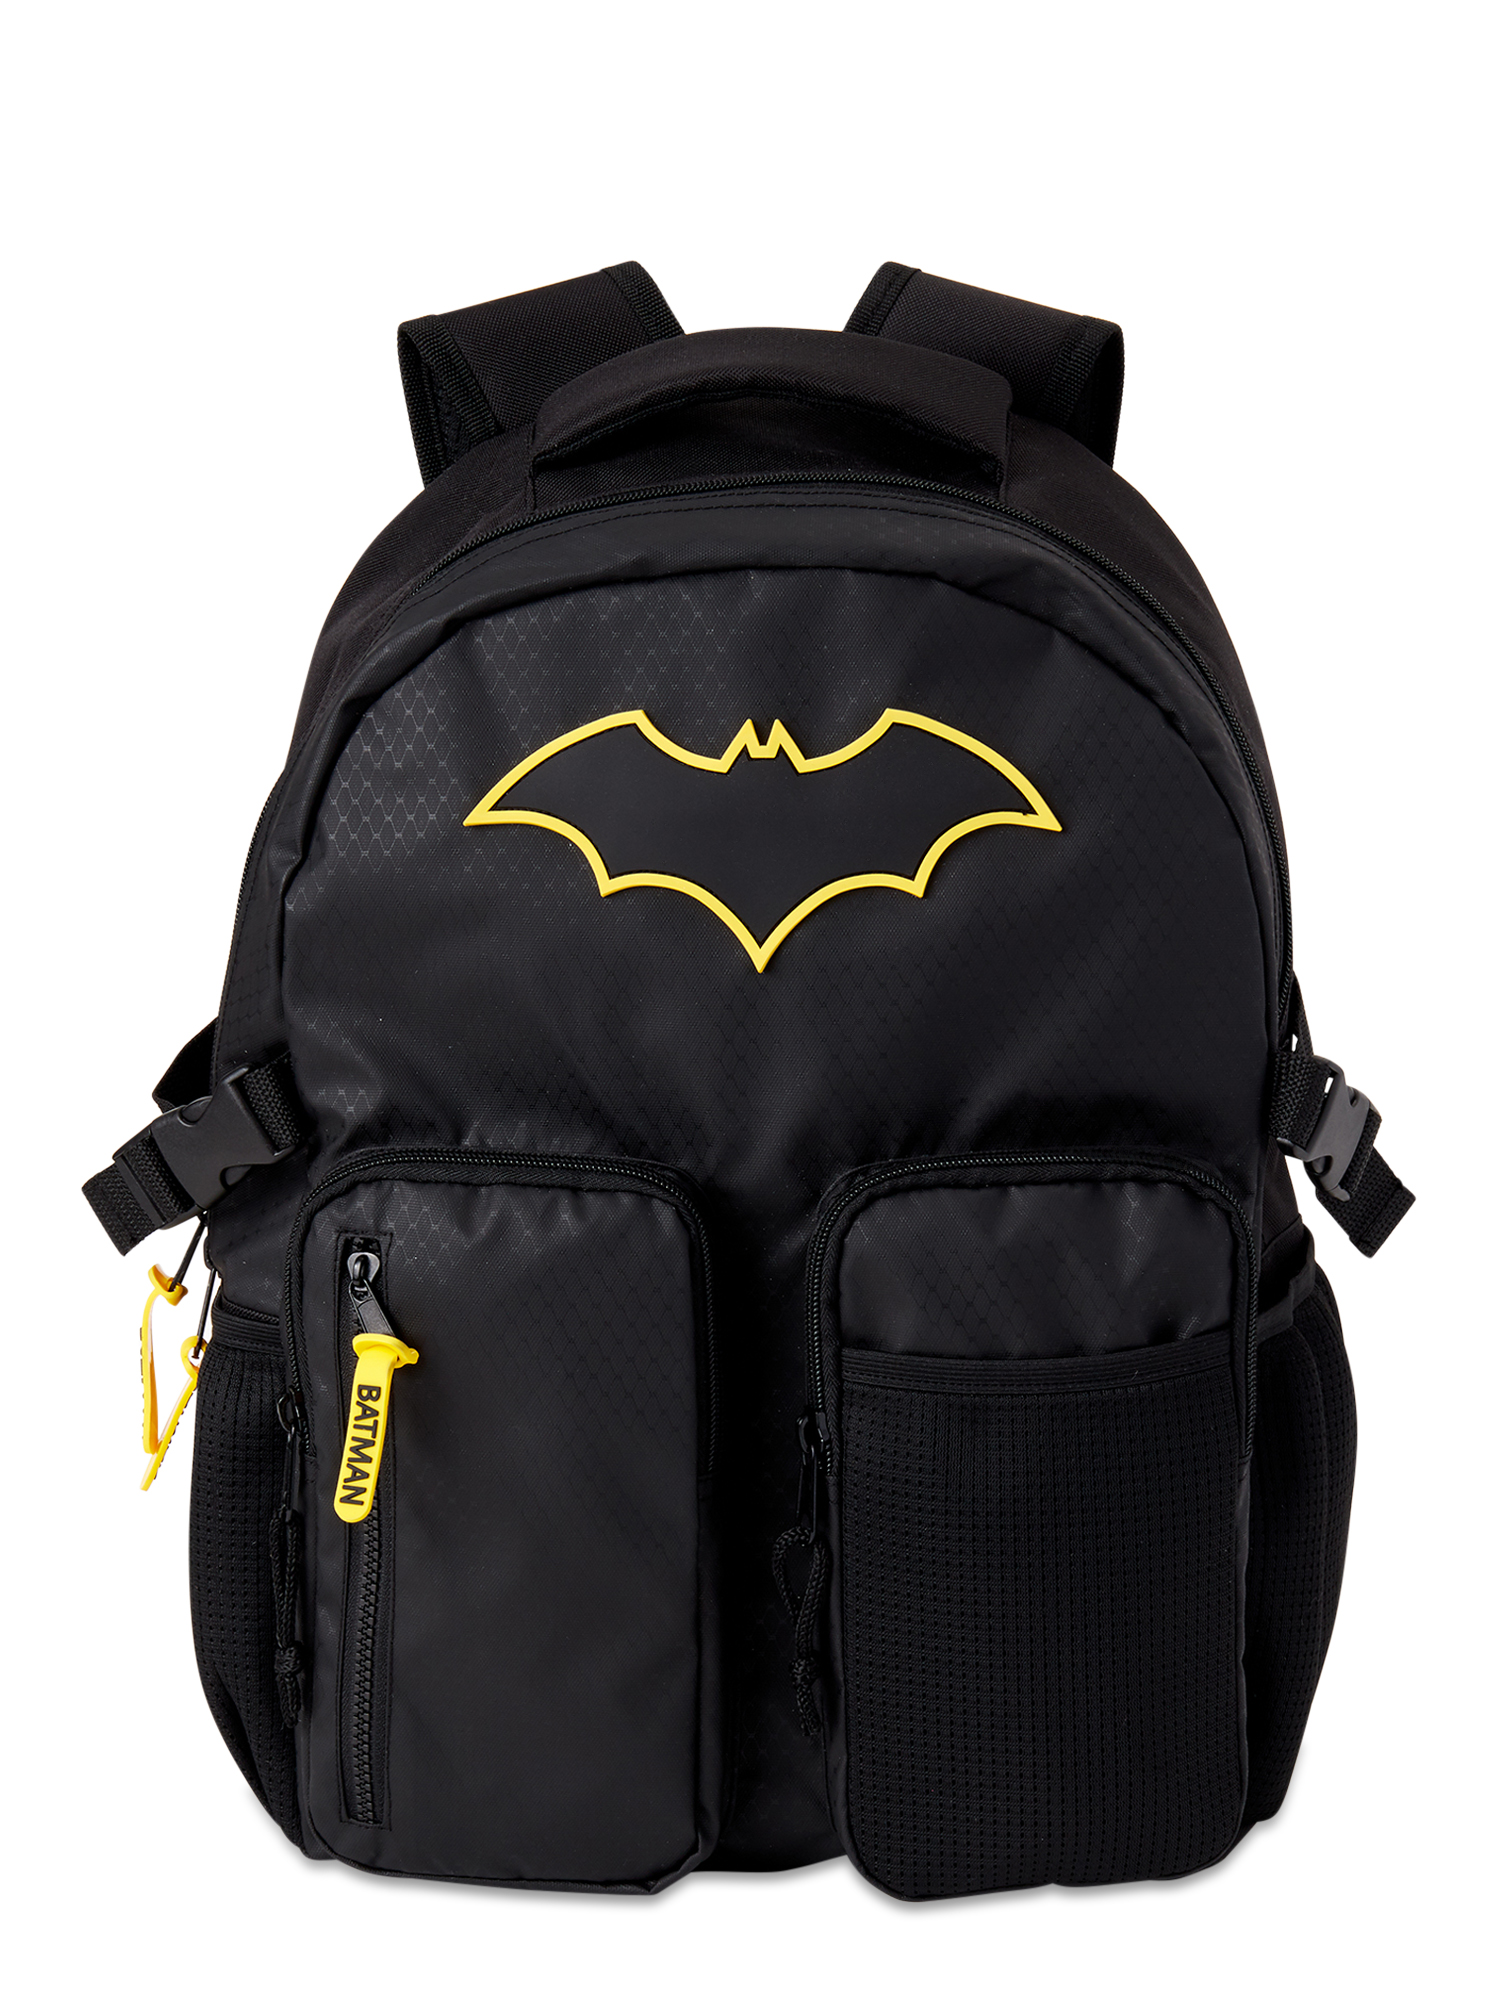 Warner Bros. DC Batman Kids Boys' Black Utility Backpack - image 1 of 4